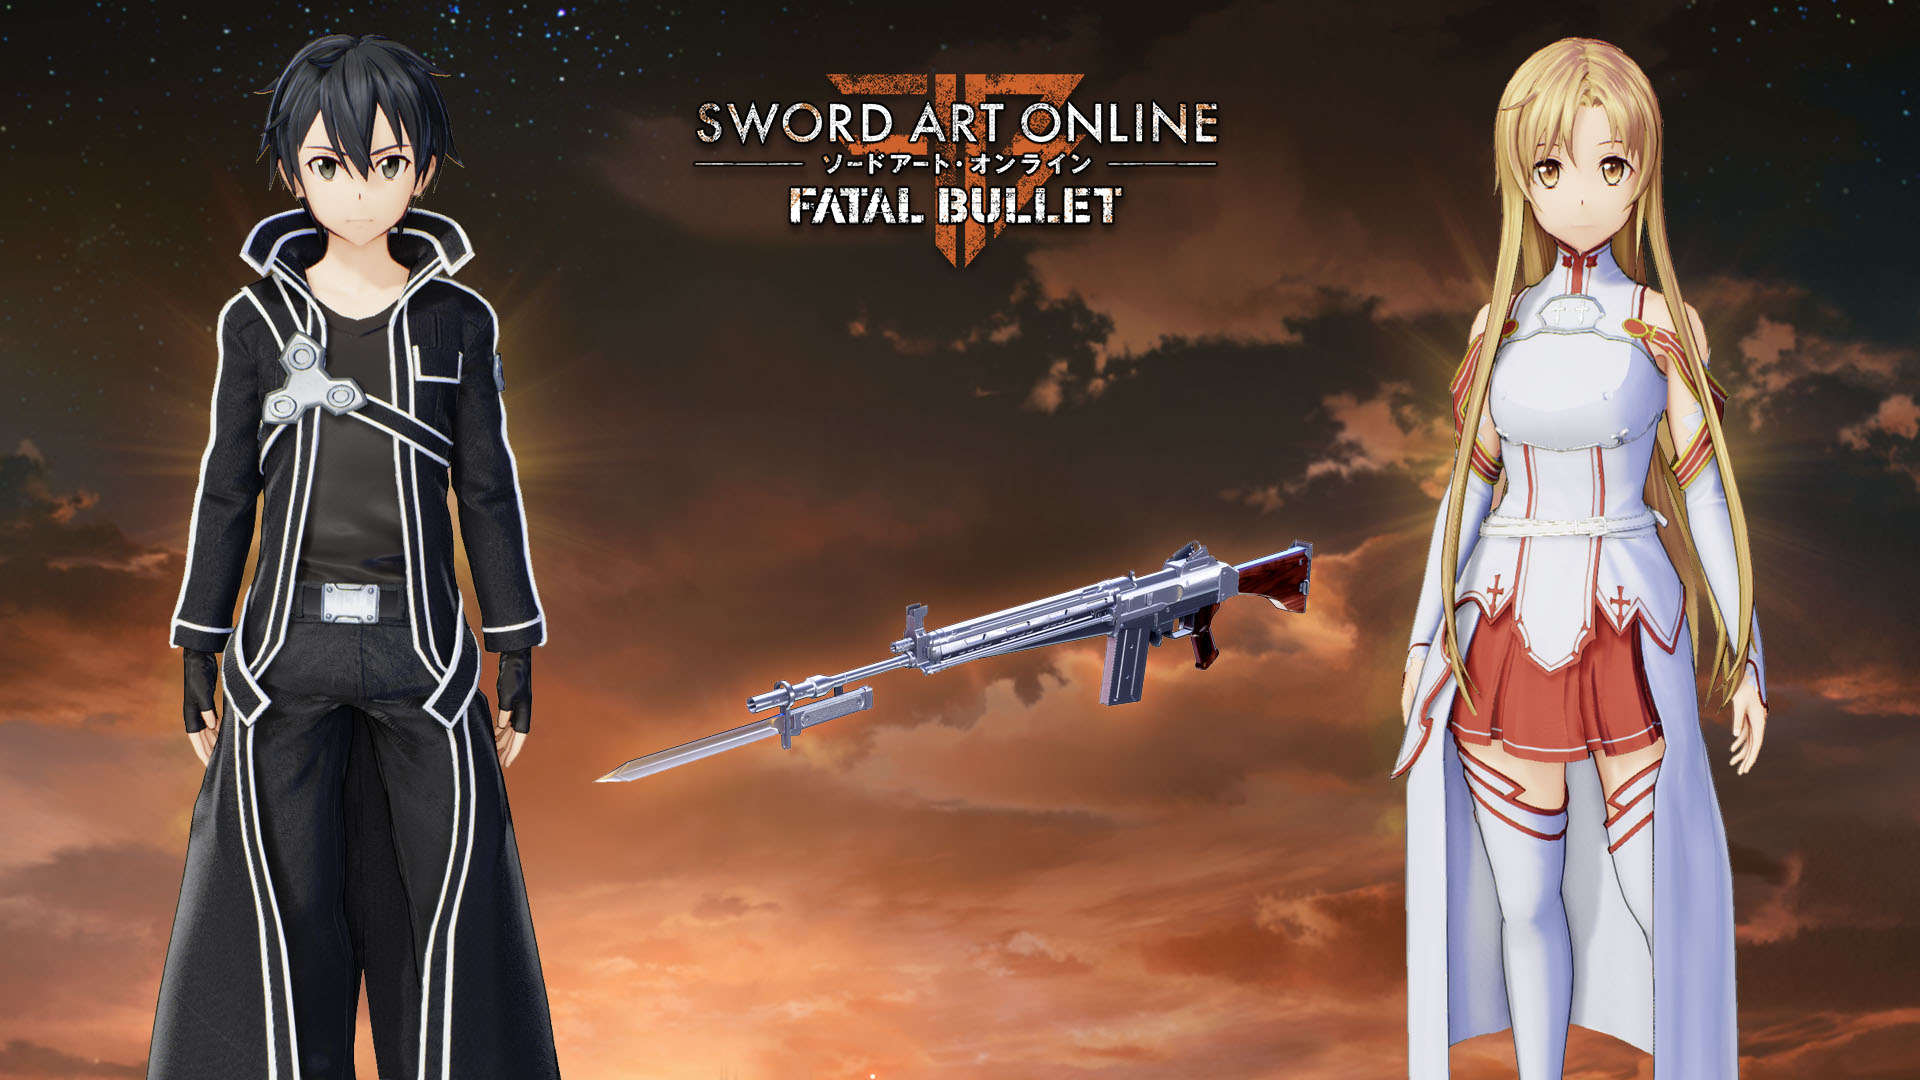 Sword Art Online: Fatal Bullet Review - Immersive MMORPG In The